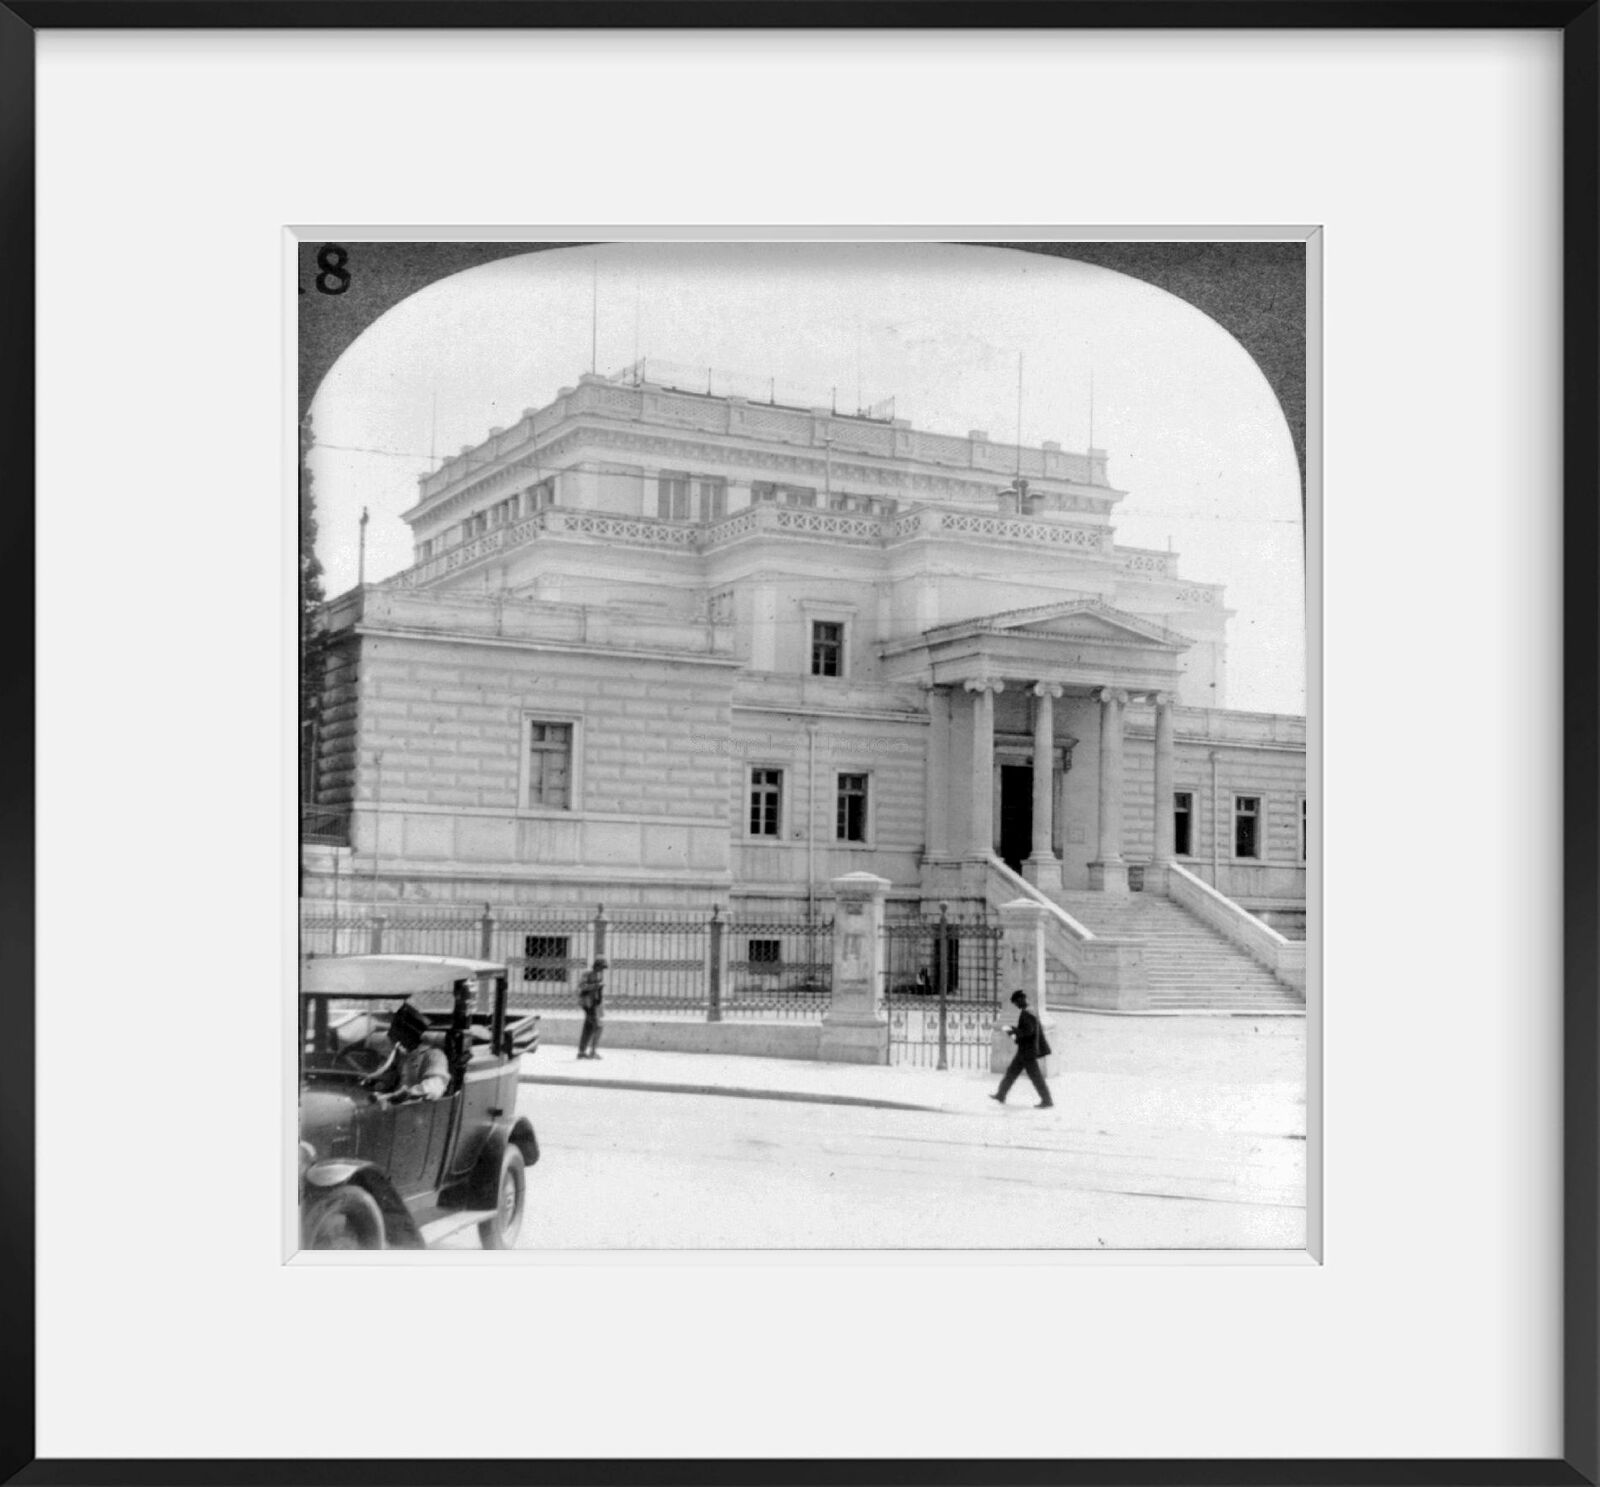 c1929 Aug. 22 photograph of The Greek Parliament Building, Athens, Greece